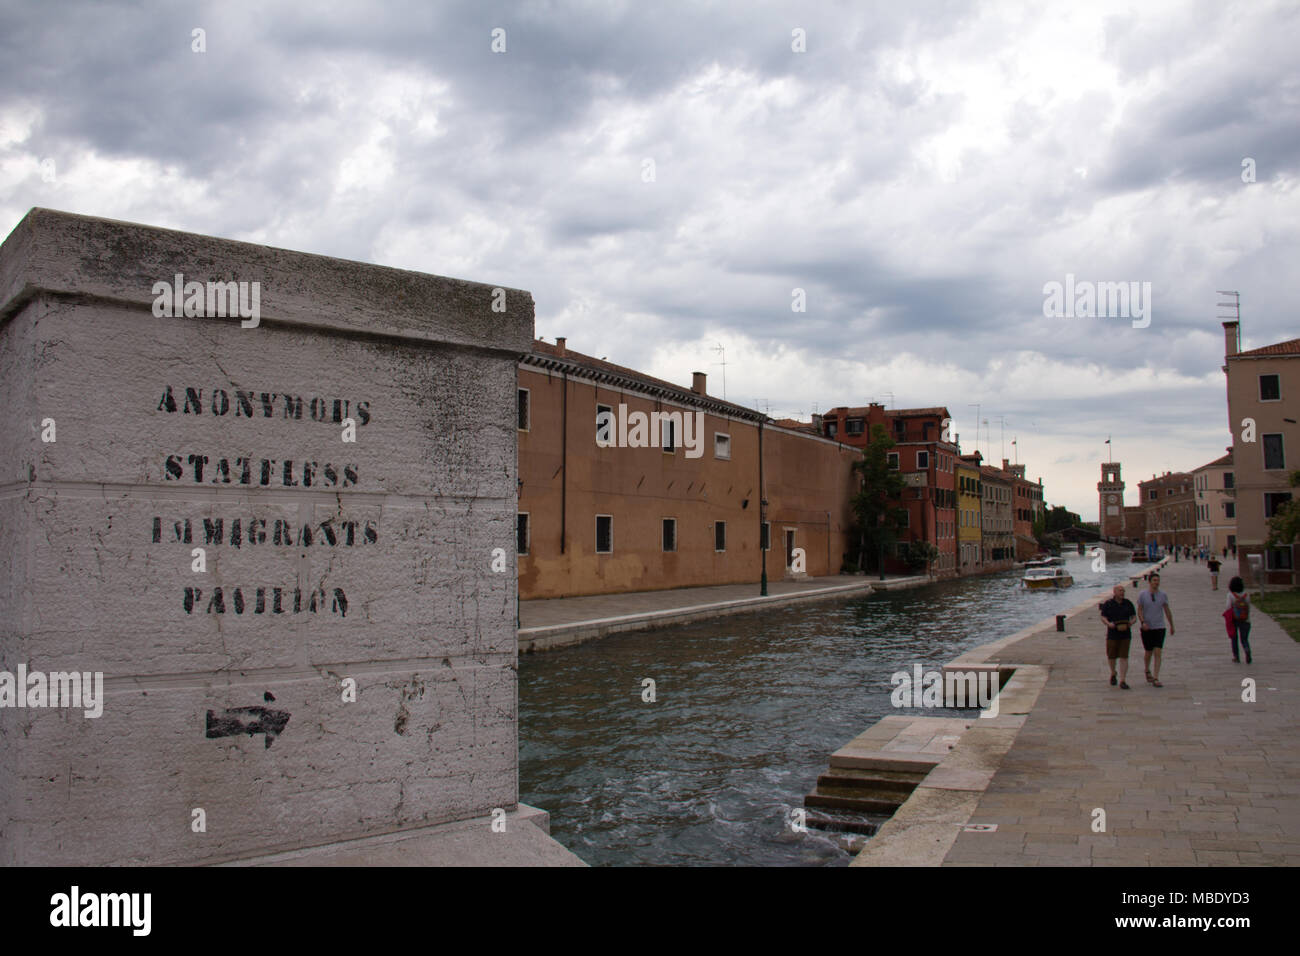 Anonyme staatenlose Einwanderer Pavillon graffiti in Venedig, Italien Stockfoto